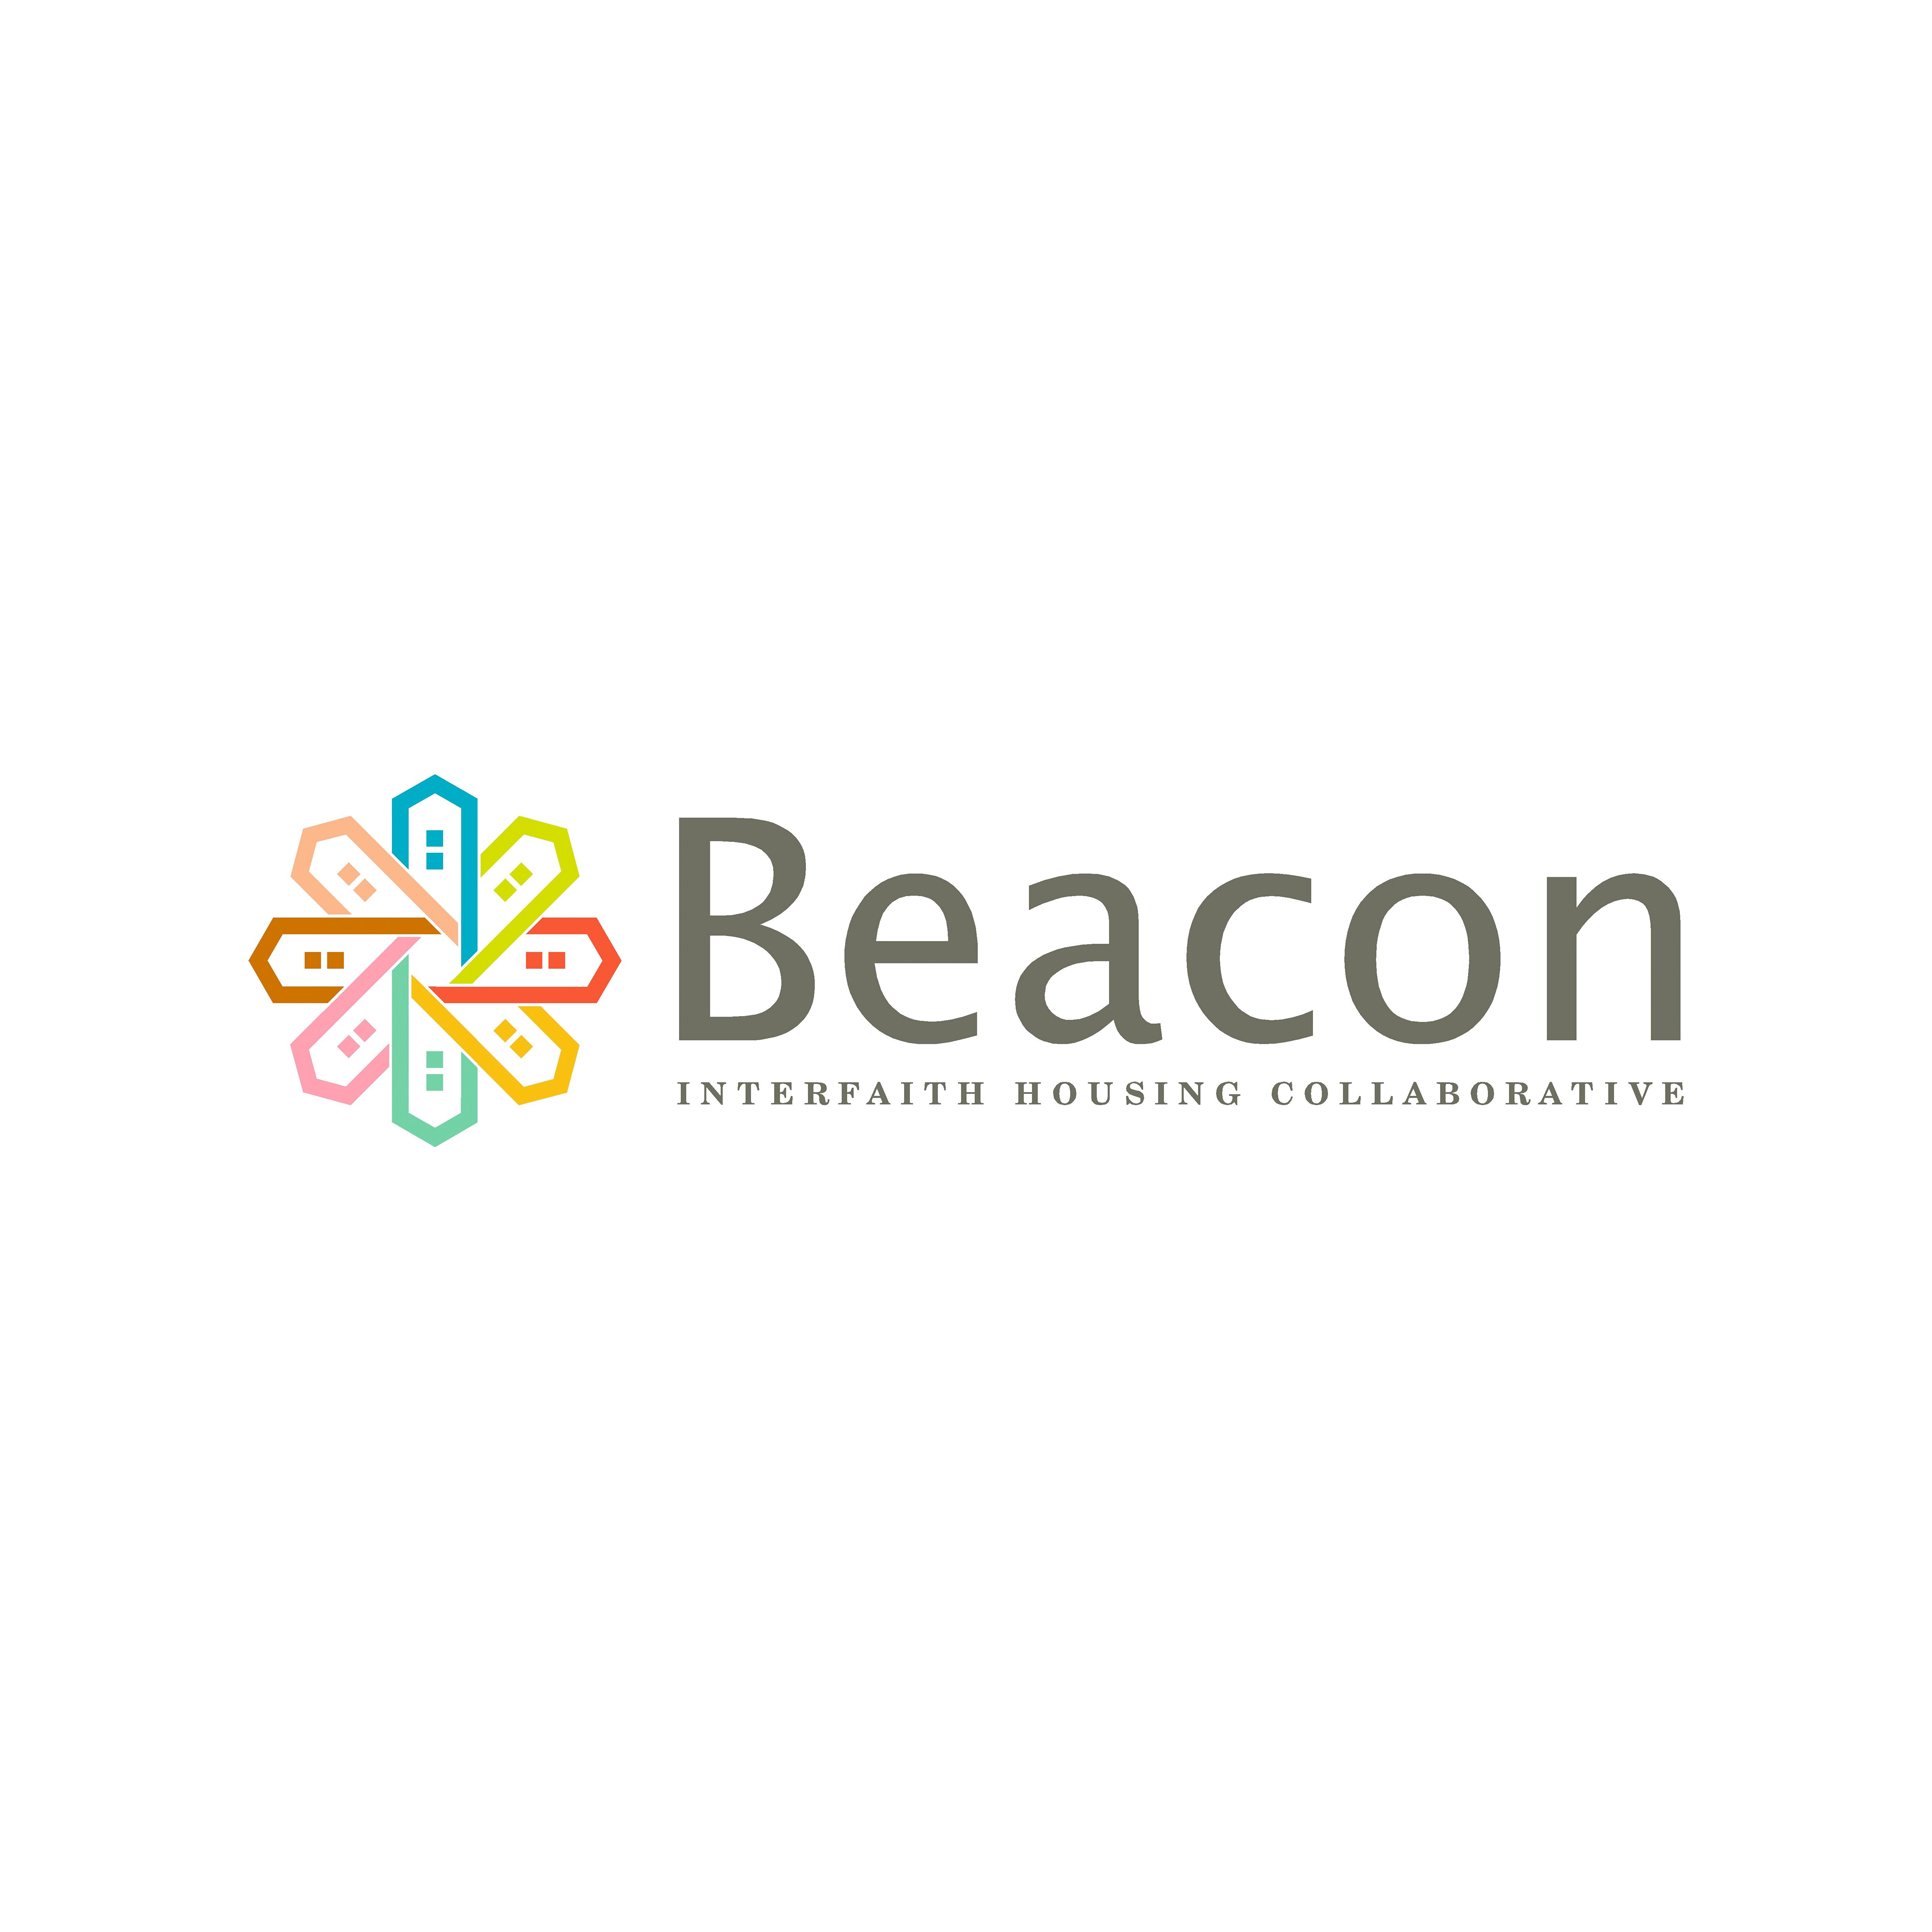 BEACON_01.jpg